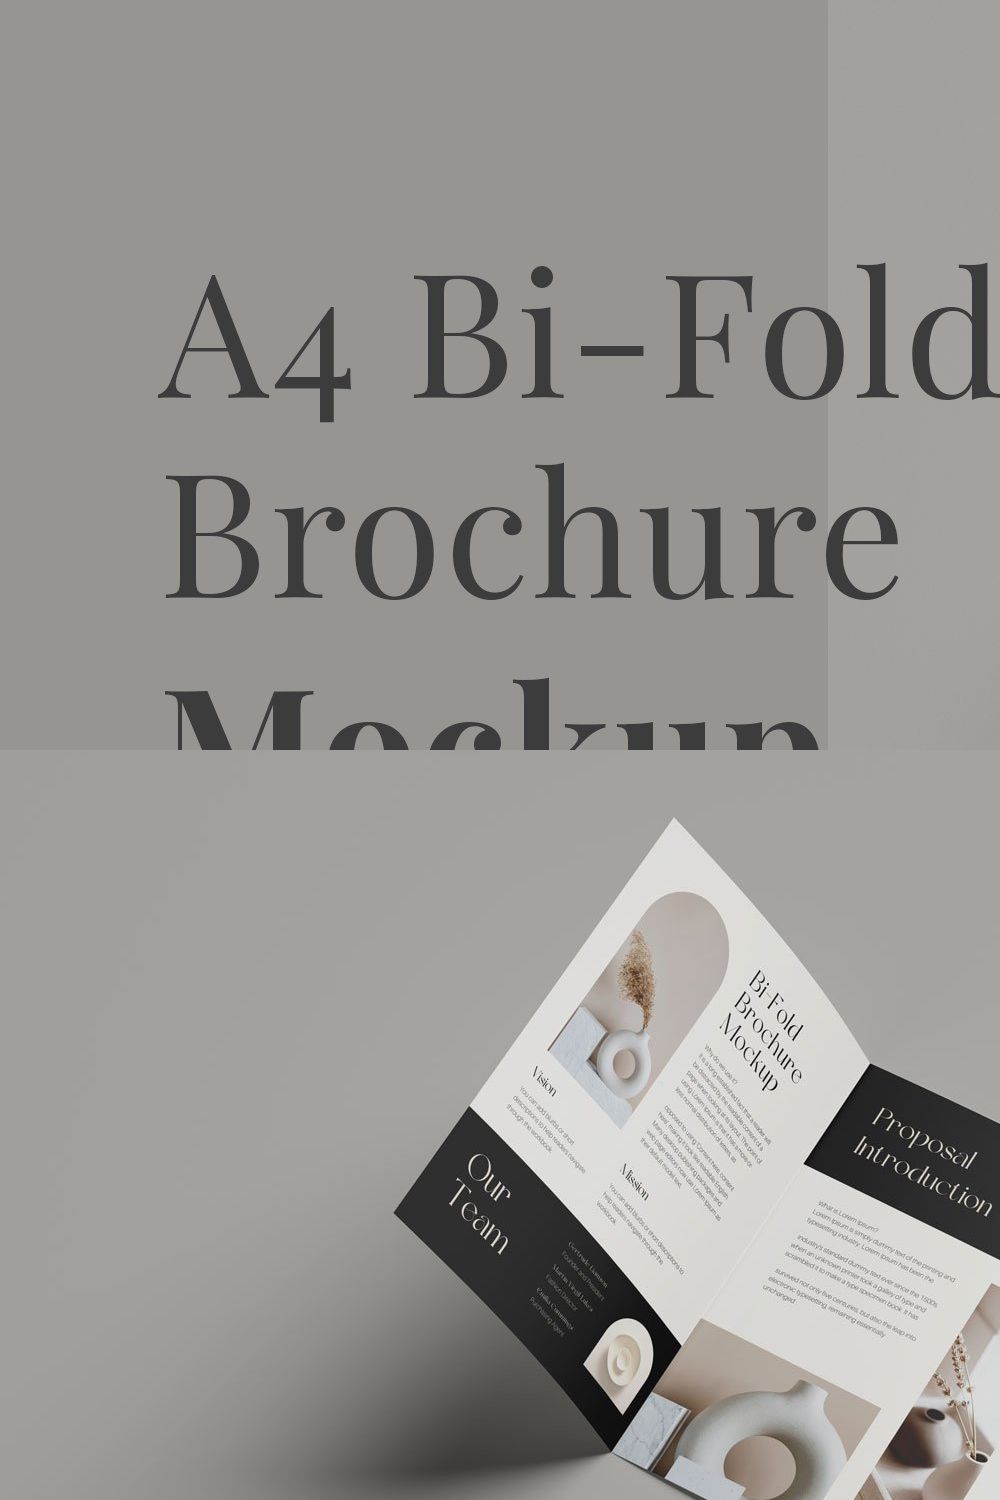 A4 Bi-Fold Brochure Mockup pinterest preview image.